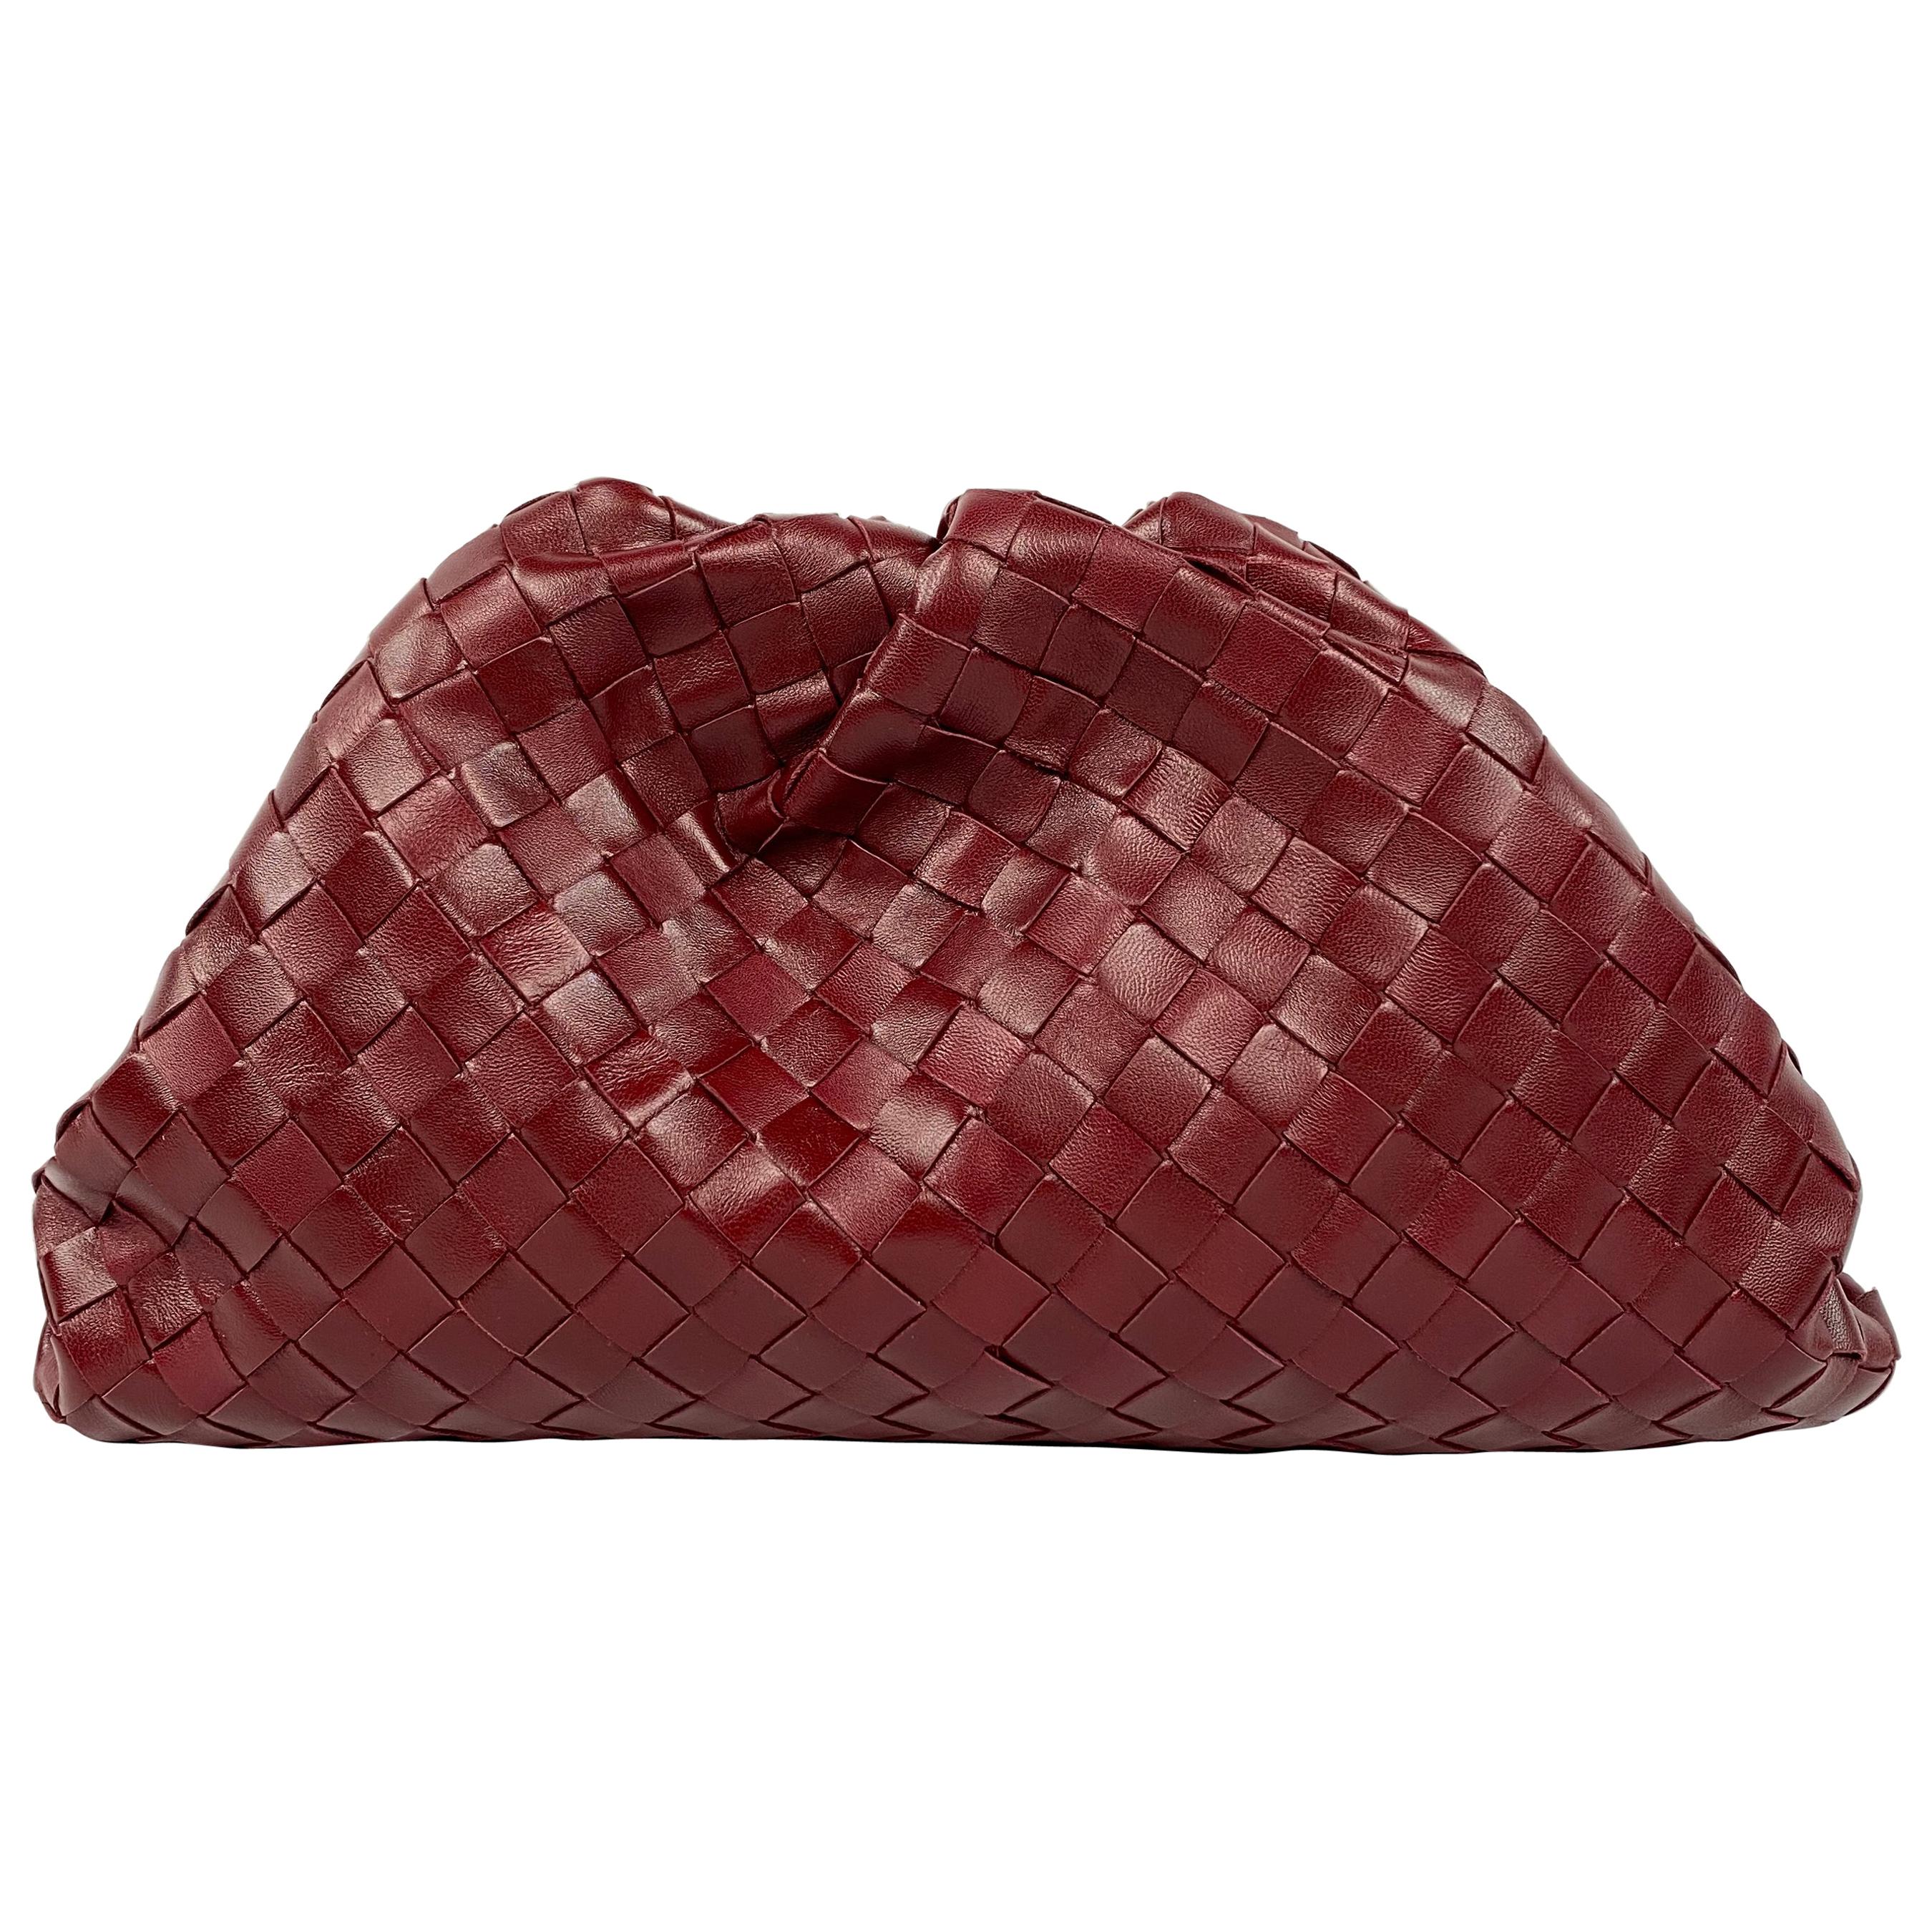 Bottega Veneta The Pouch Red Leather Clutch Purse Handbag 